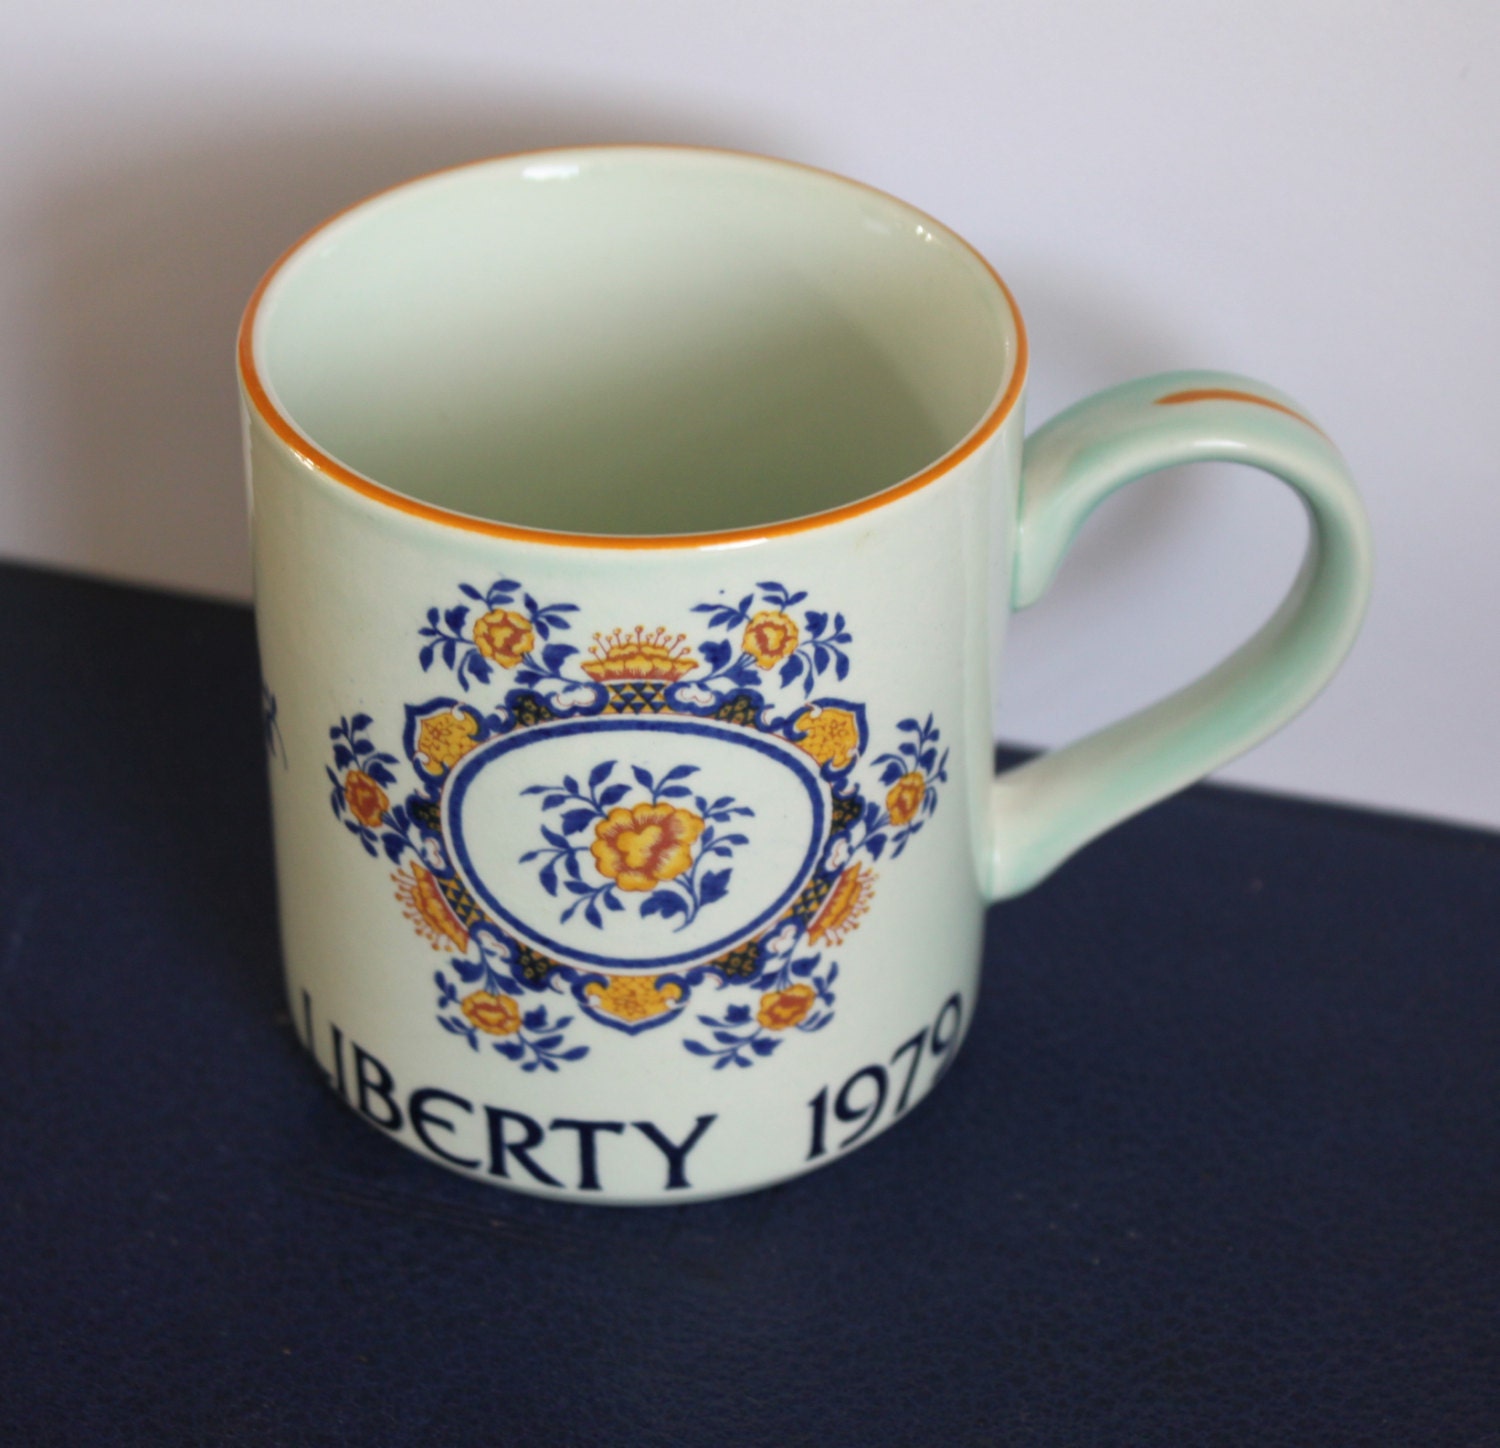 liberty london travel mug